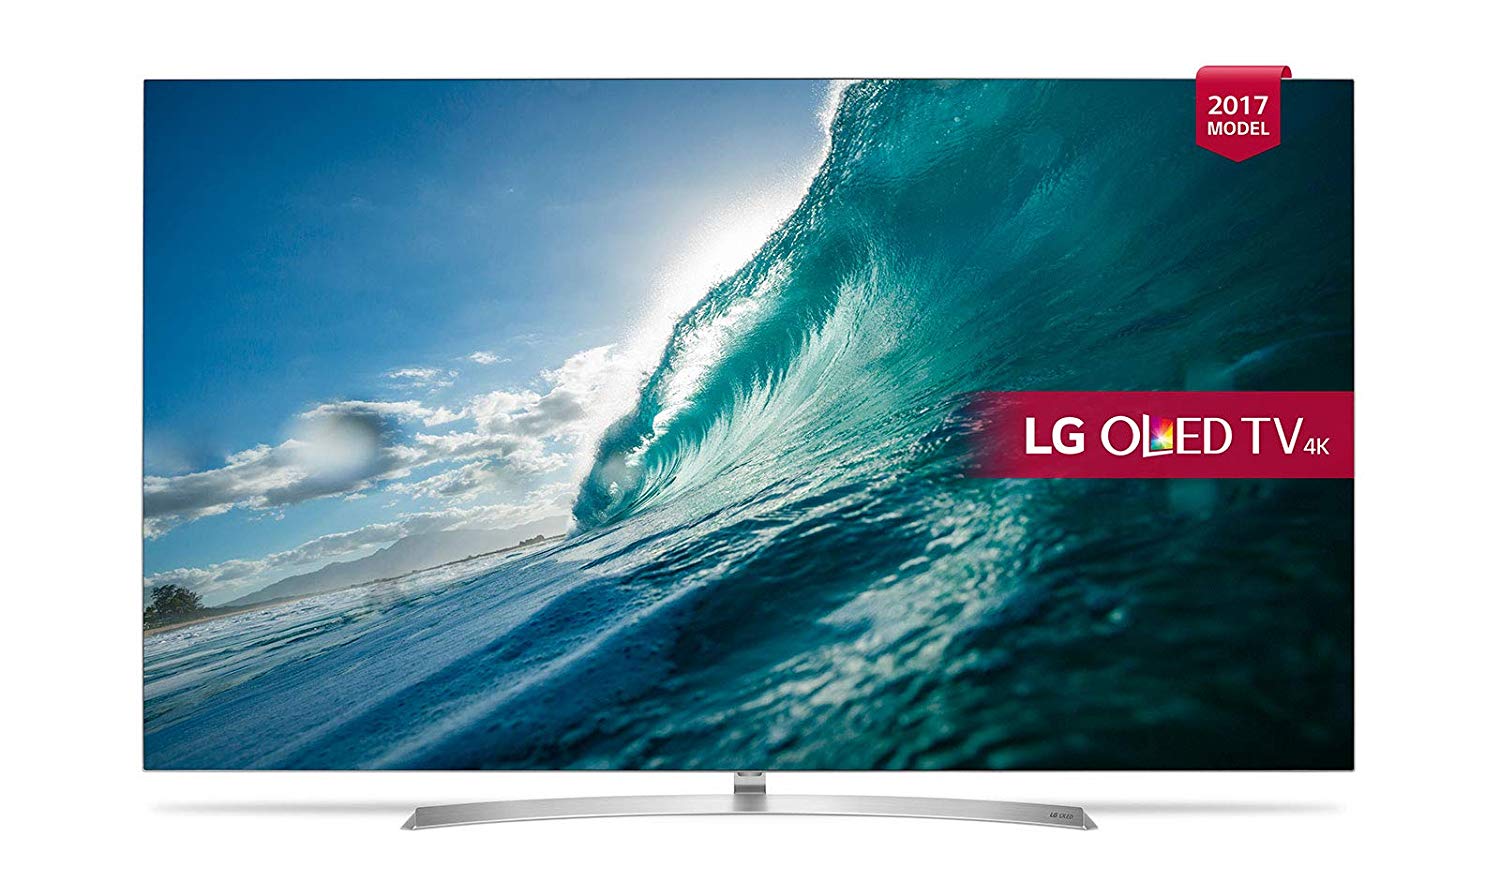 LG OLED55B7V 55 inch Premium 4K Ultra HD HDR Smart OLED TV